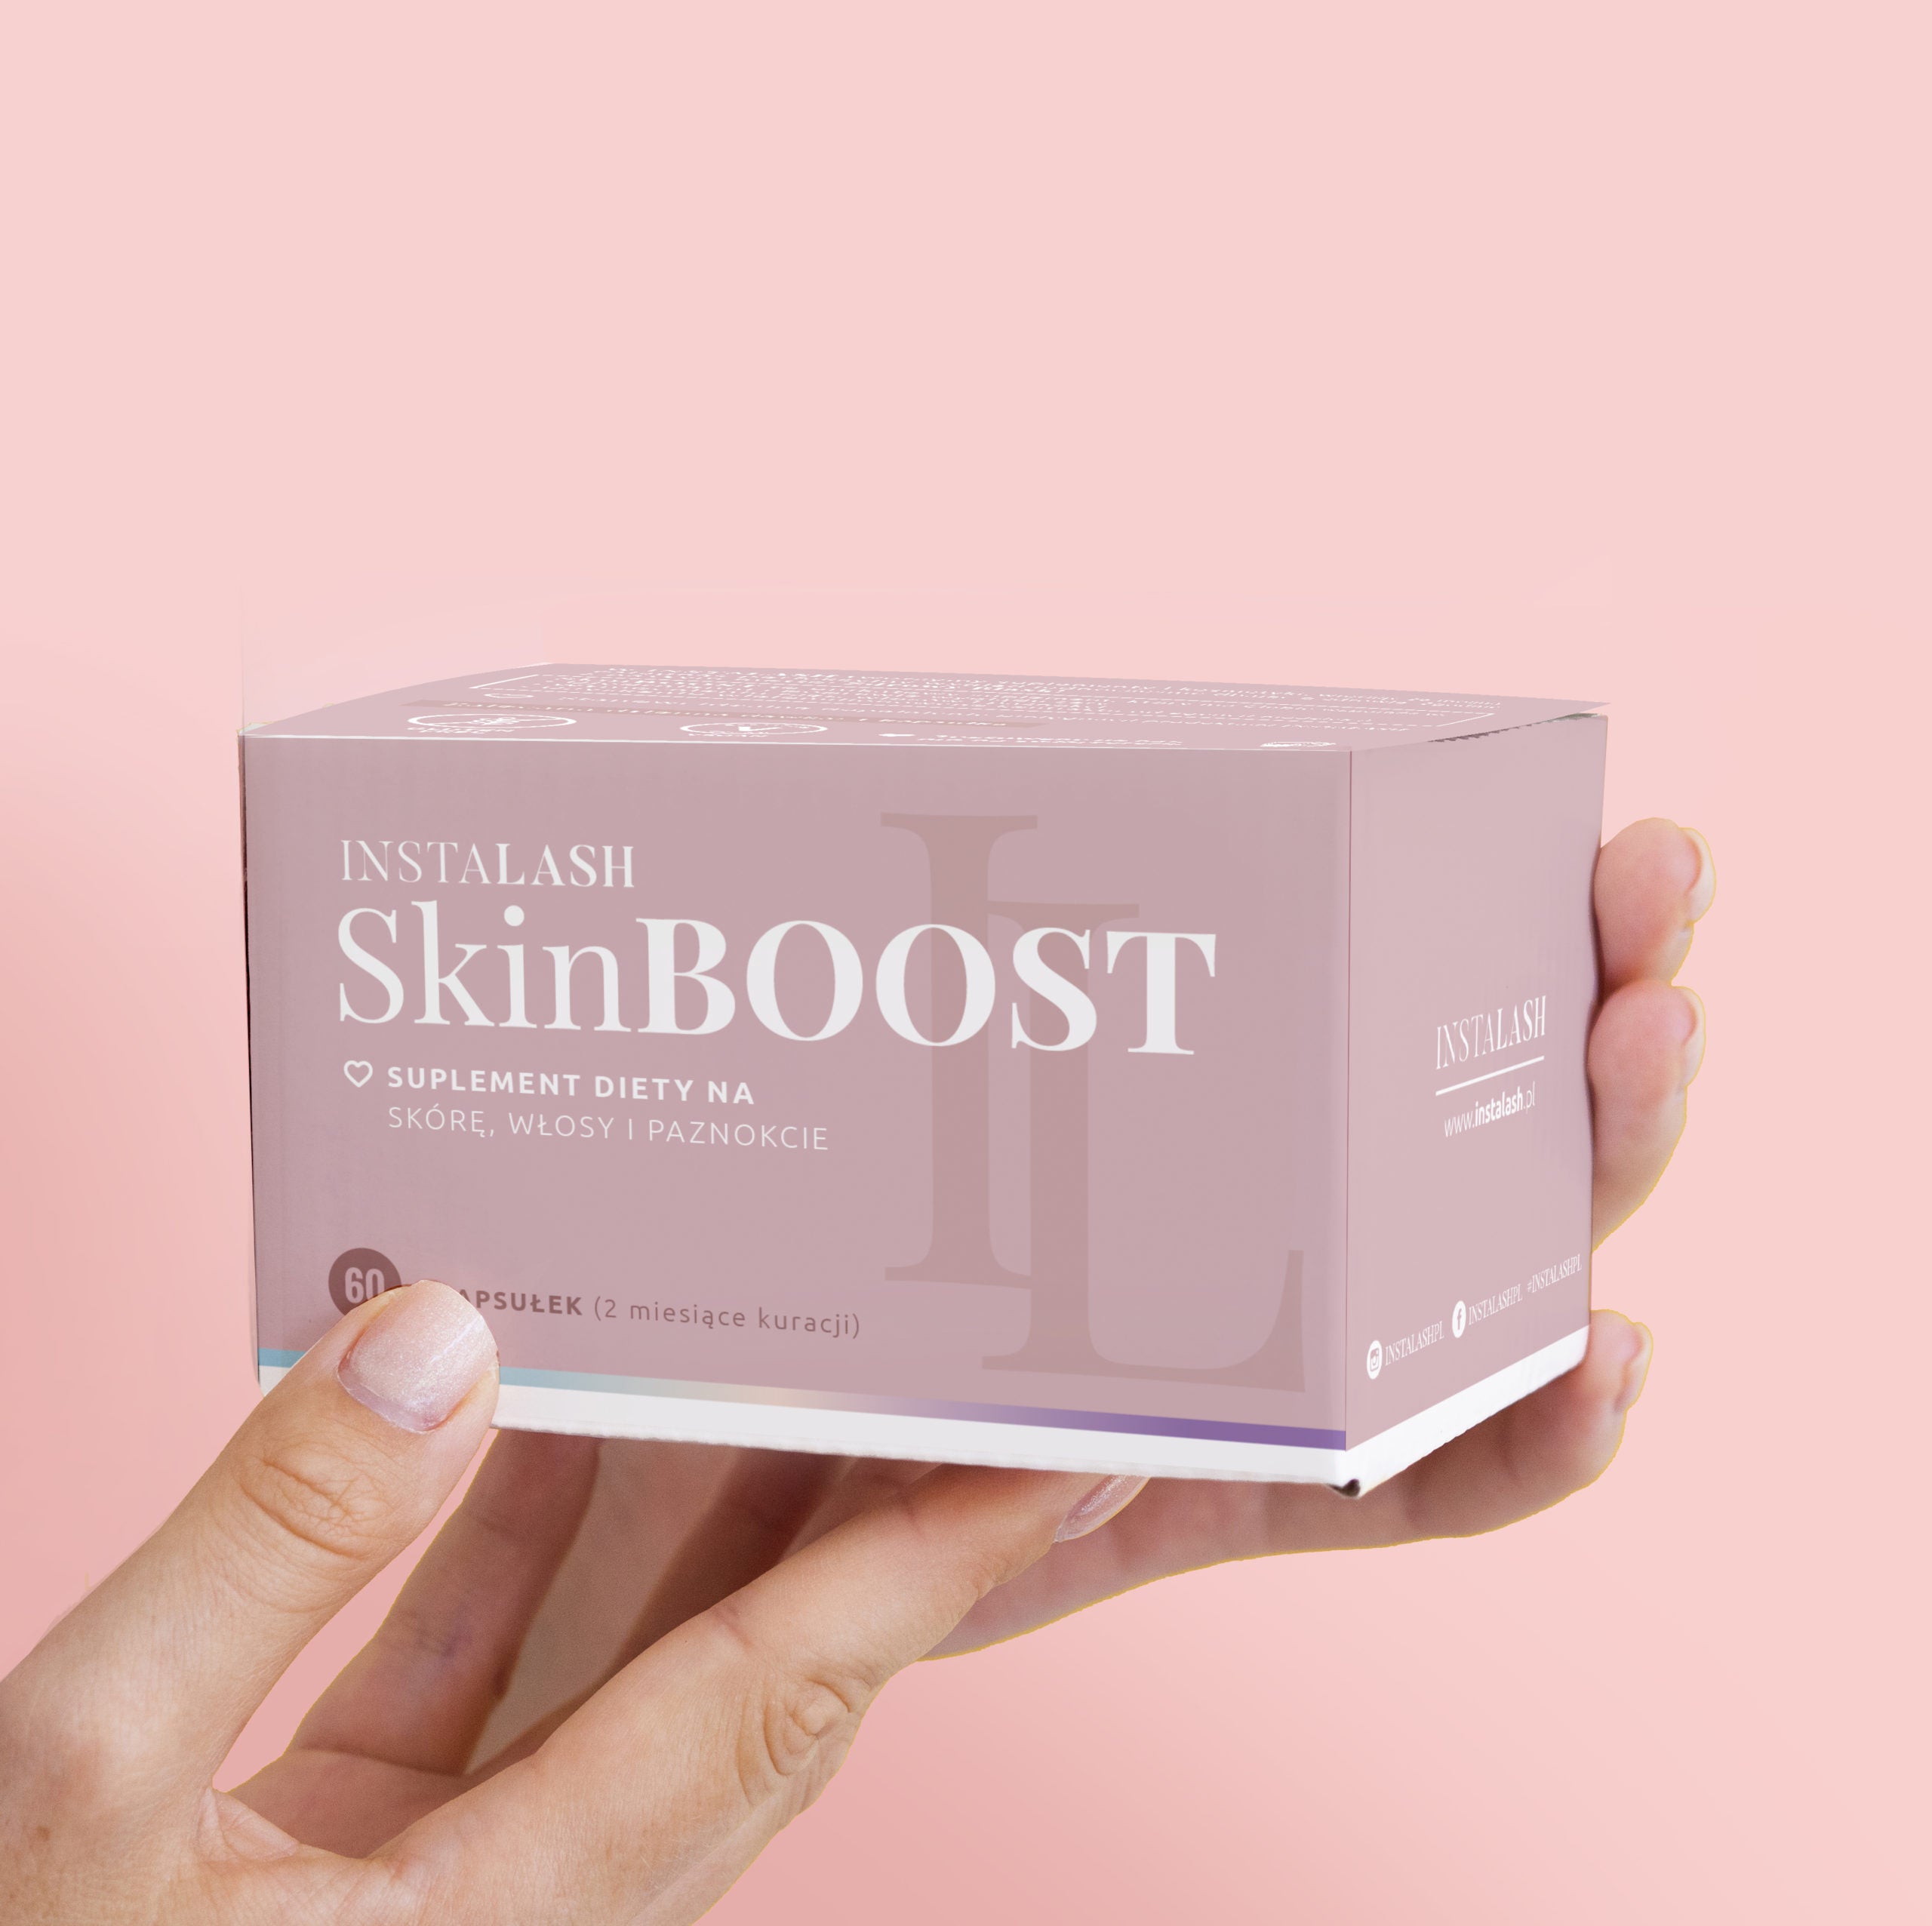 Model holding Instalash SkinBOOST – Dietary Supplement for Skin, Hair, Eyelashes & Nails 60 capsules, packaging